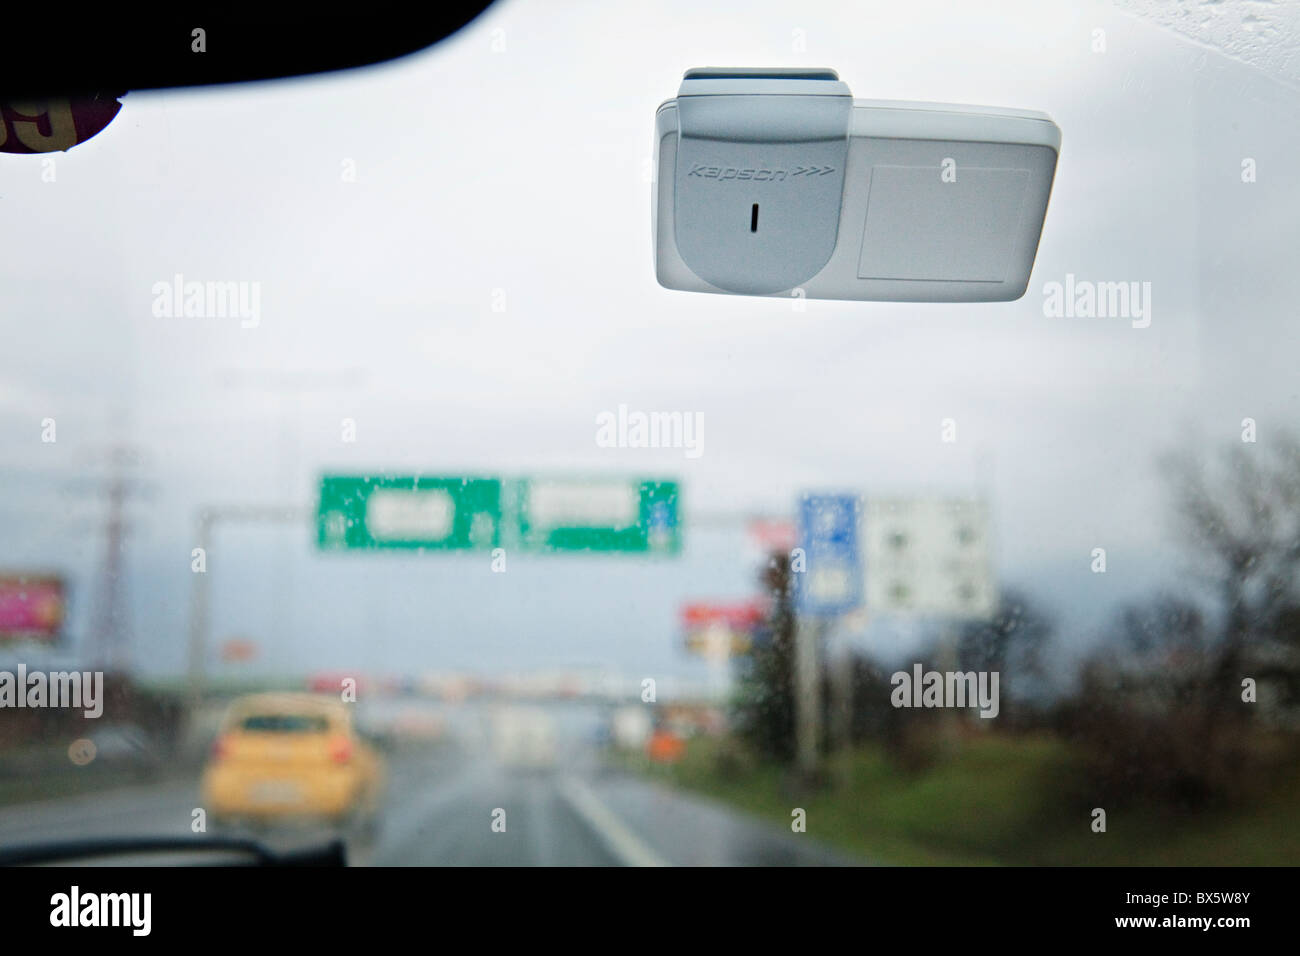 electronic-tag-kapschelectronic-toll-system-etc-passenger-car-motorway-BX5W8Y.jpg